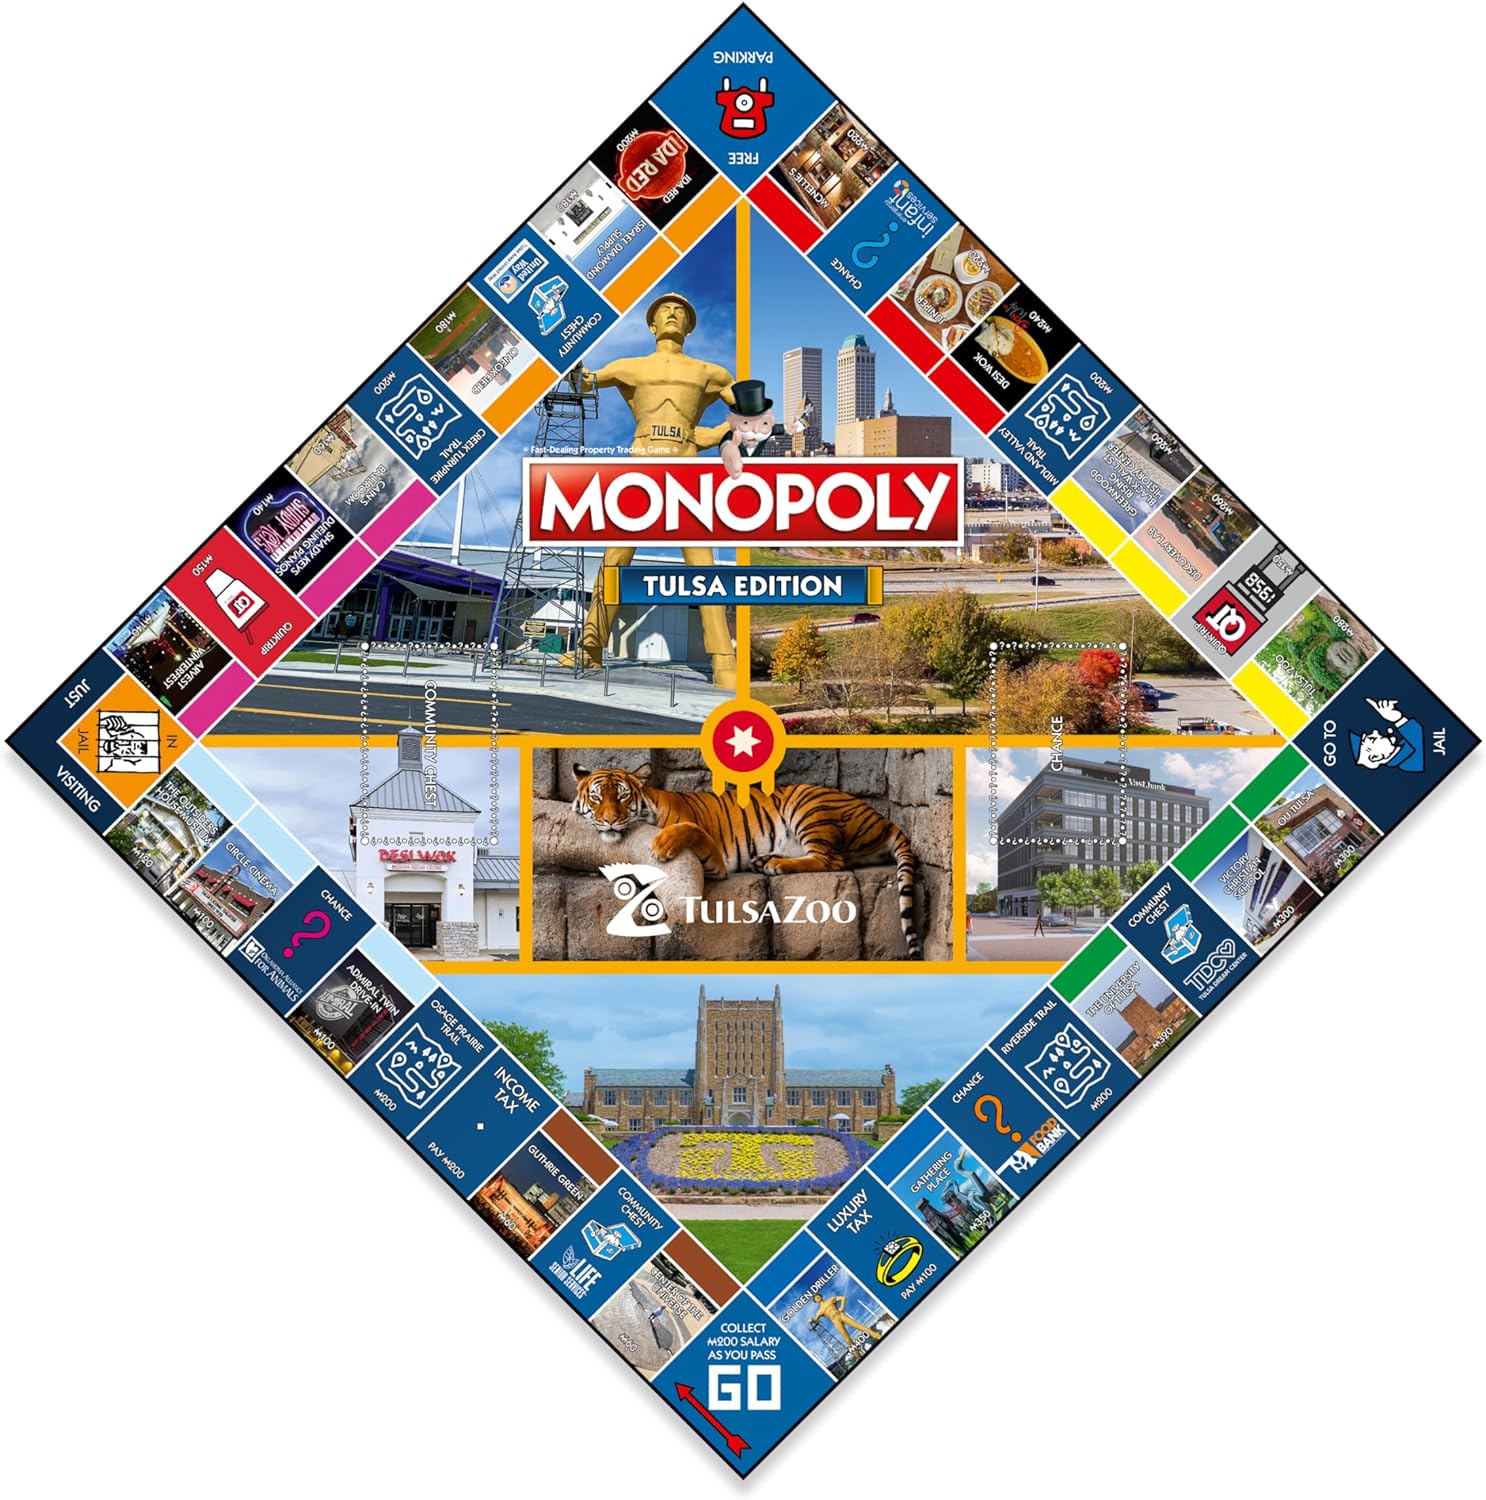 Monopoly Tulsa Edition Board Game